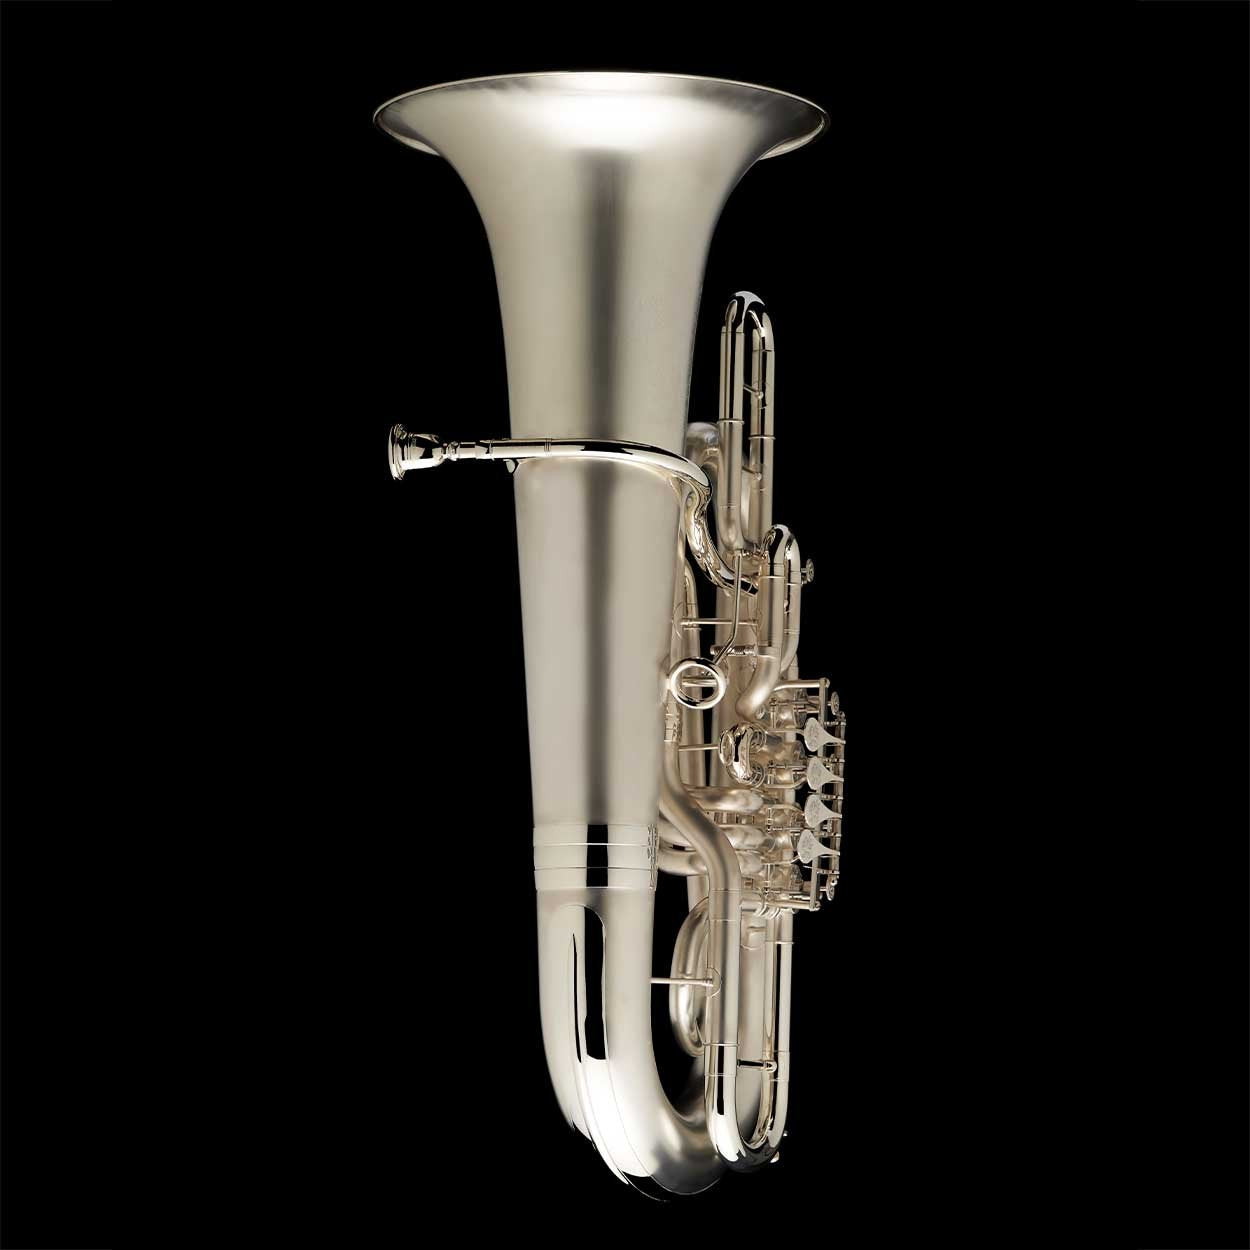 F Tuba ‘Berg’ – TF435 P